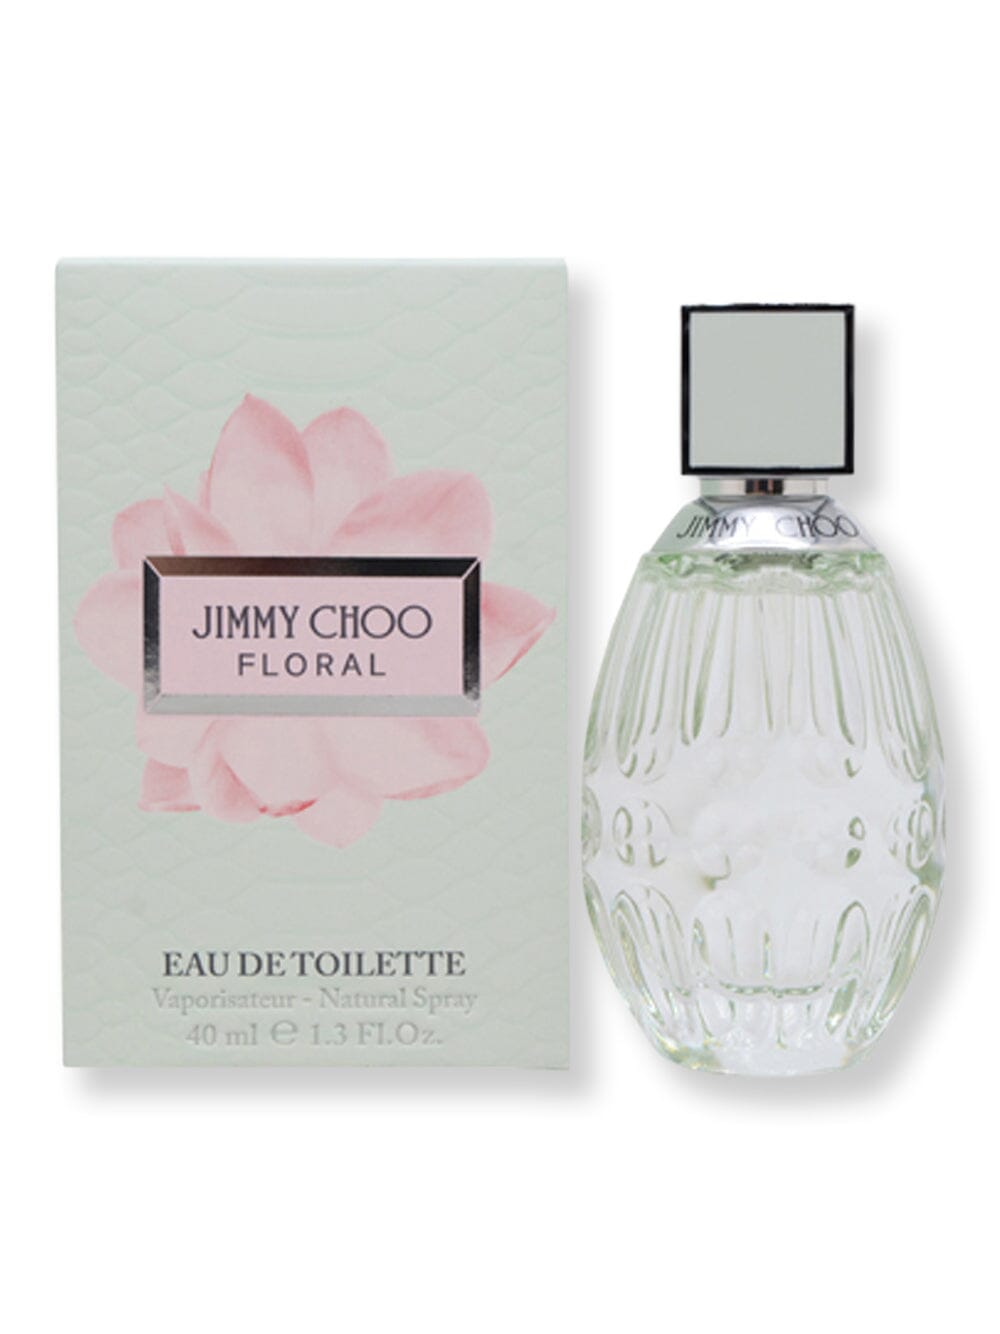 Jimmy Choo Jimmy Choo Floral EDT Spray 1.3 oz40 ml Perfume 